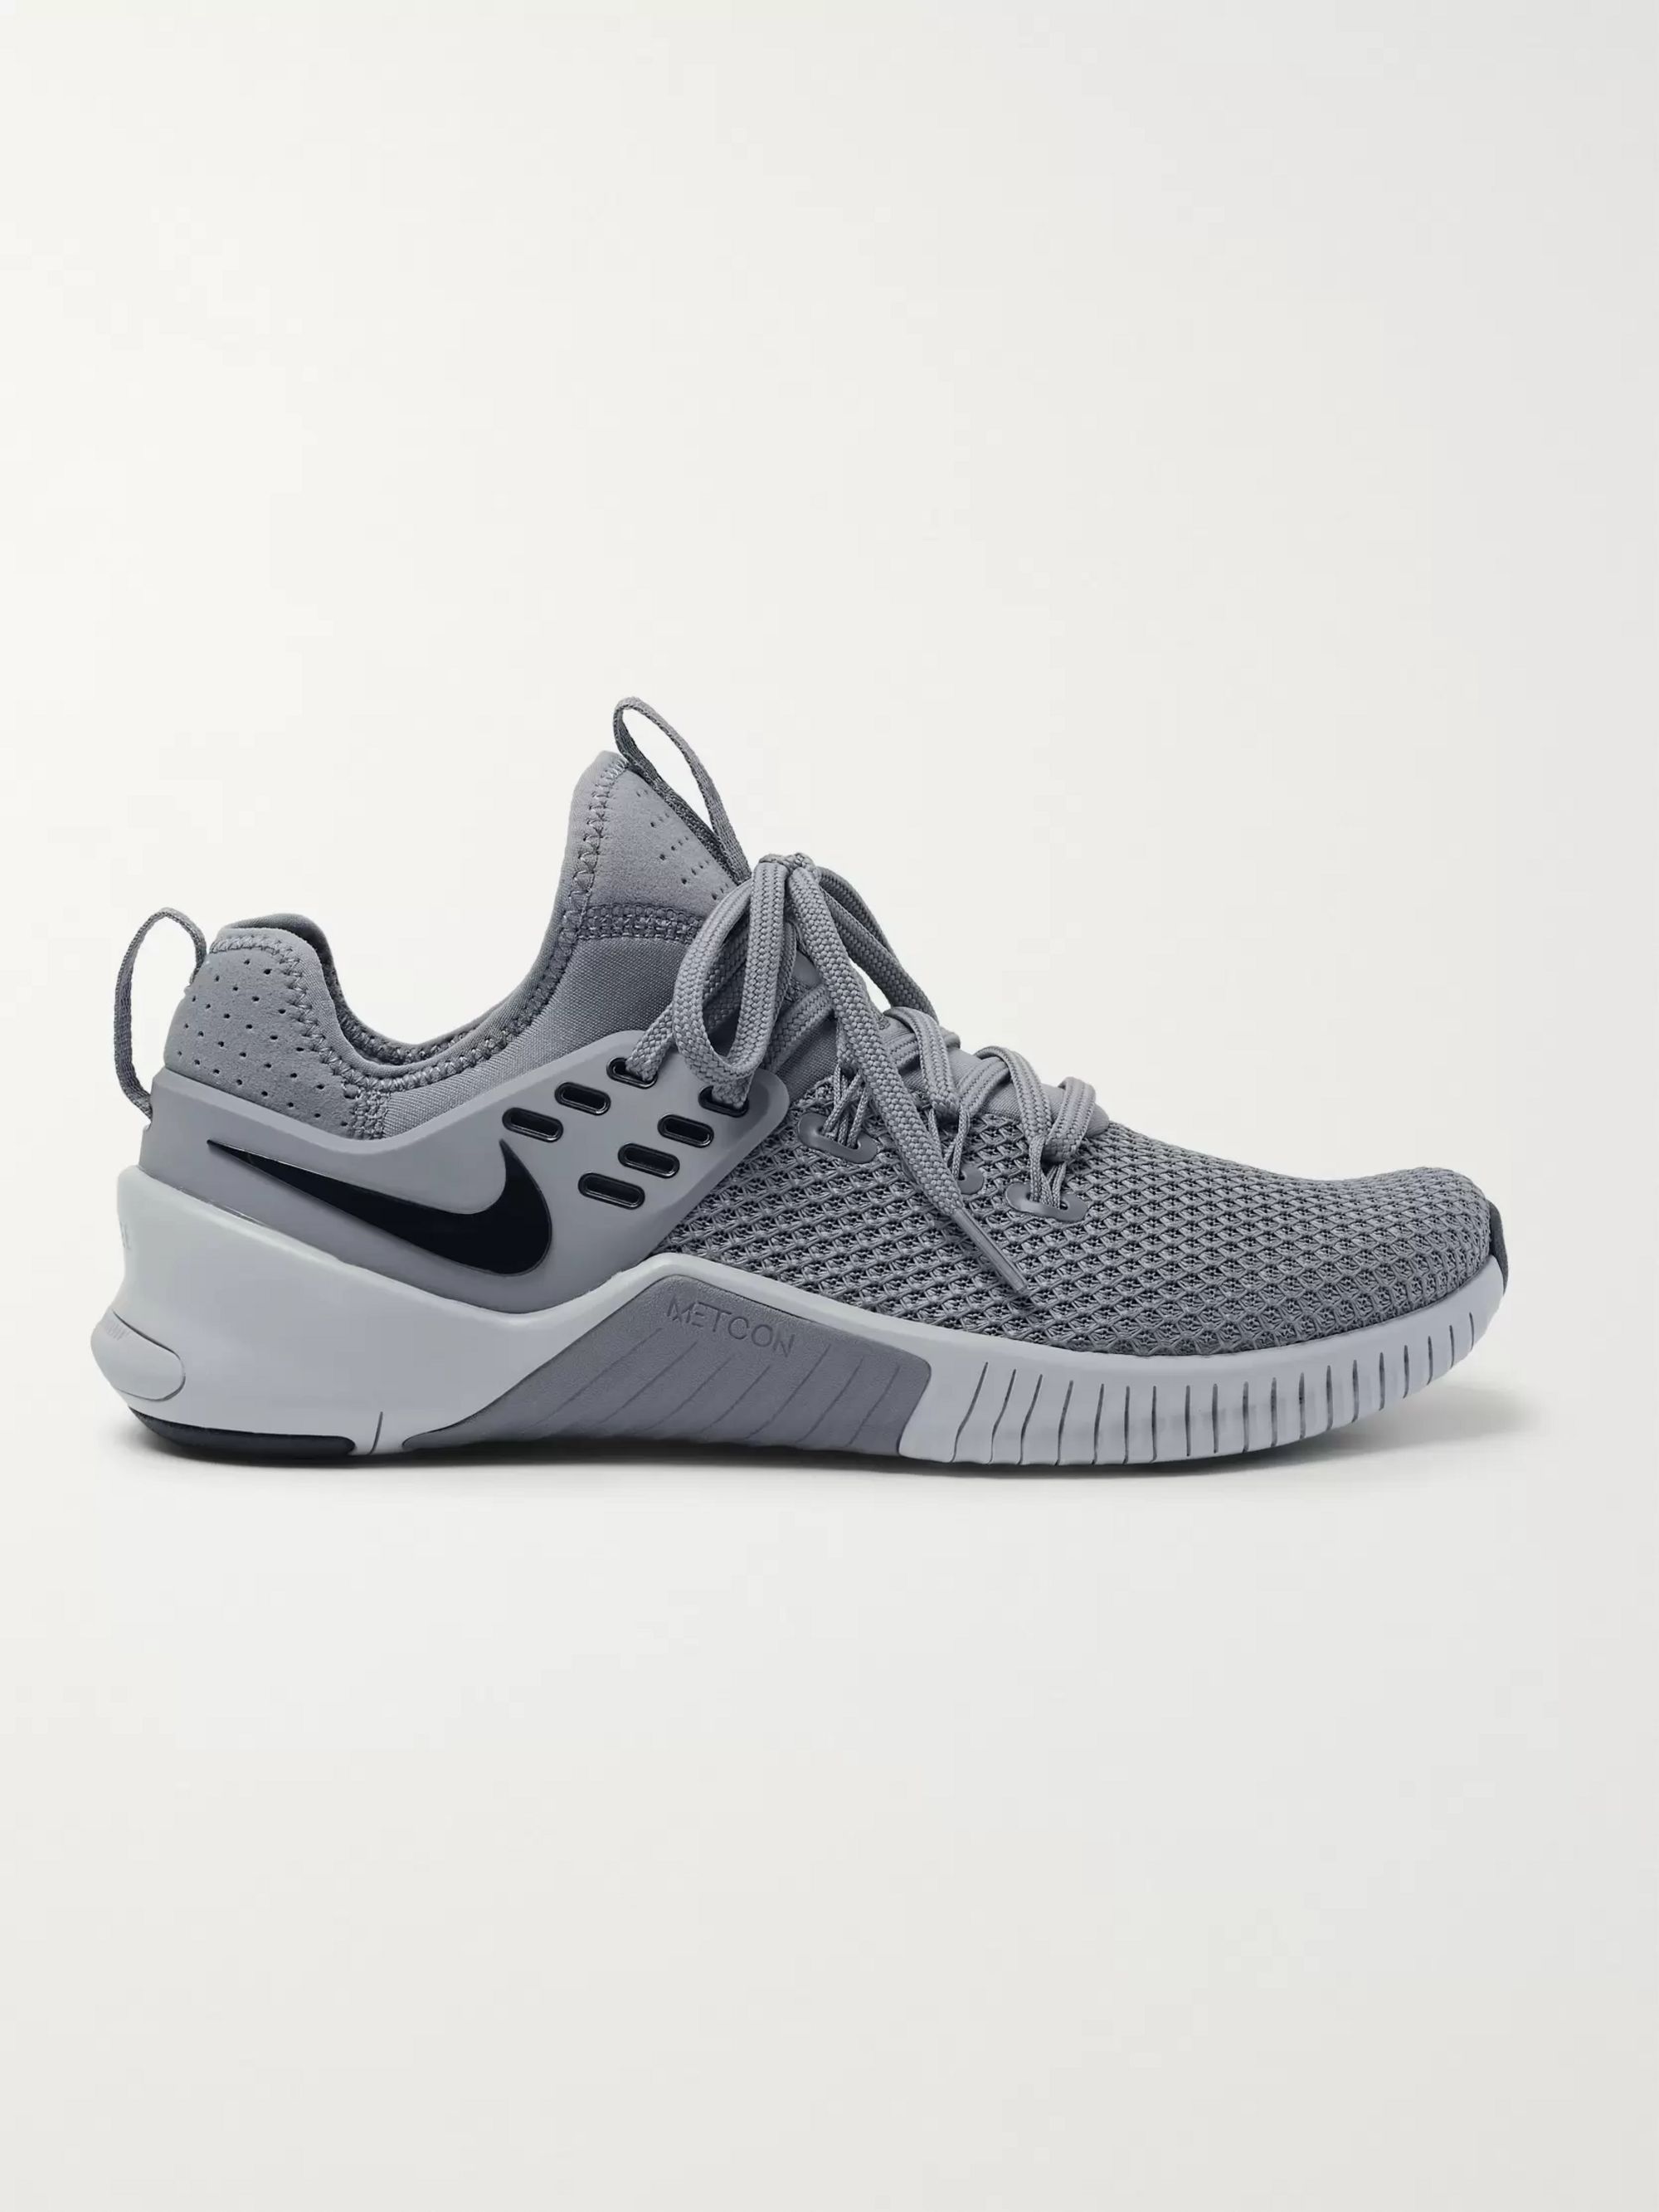 gray mesh nike shoes